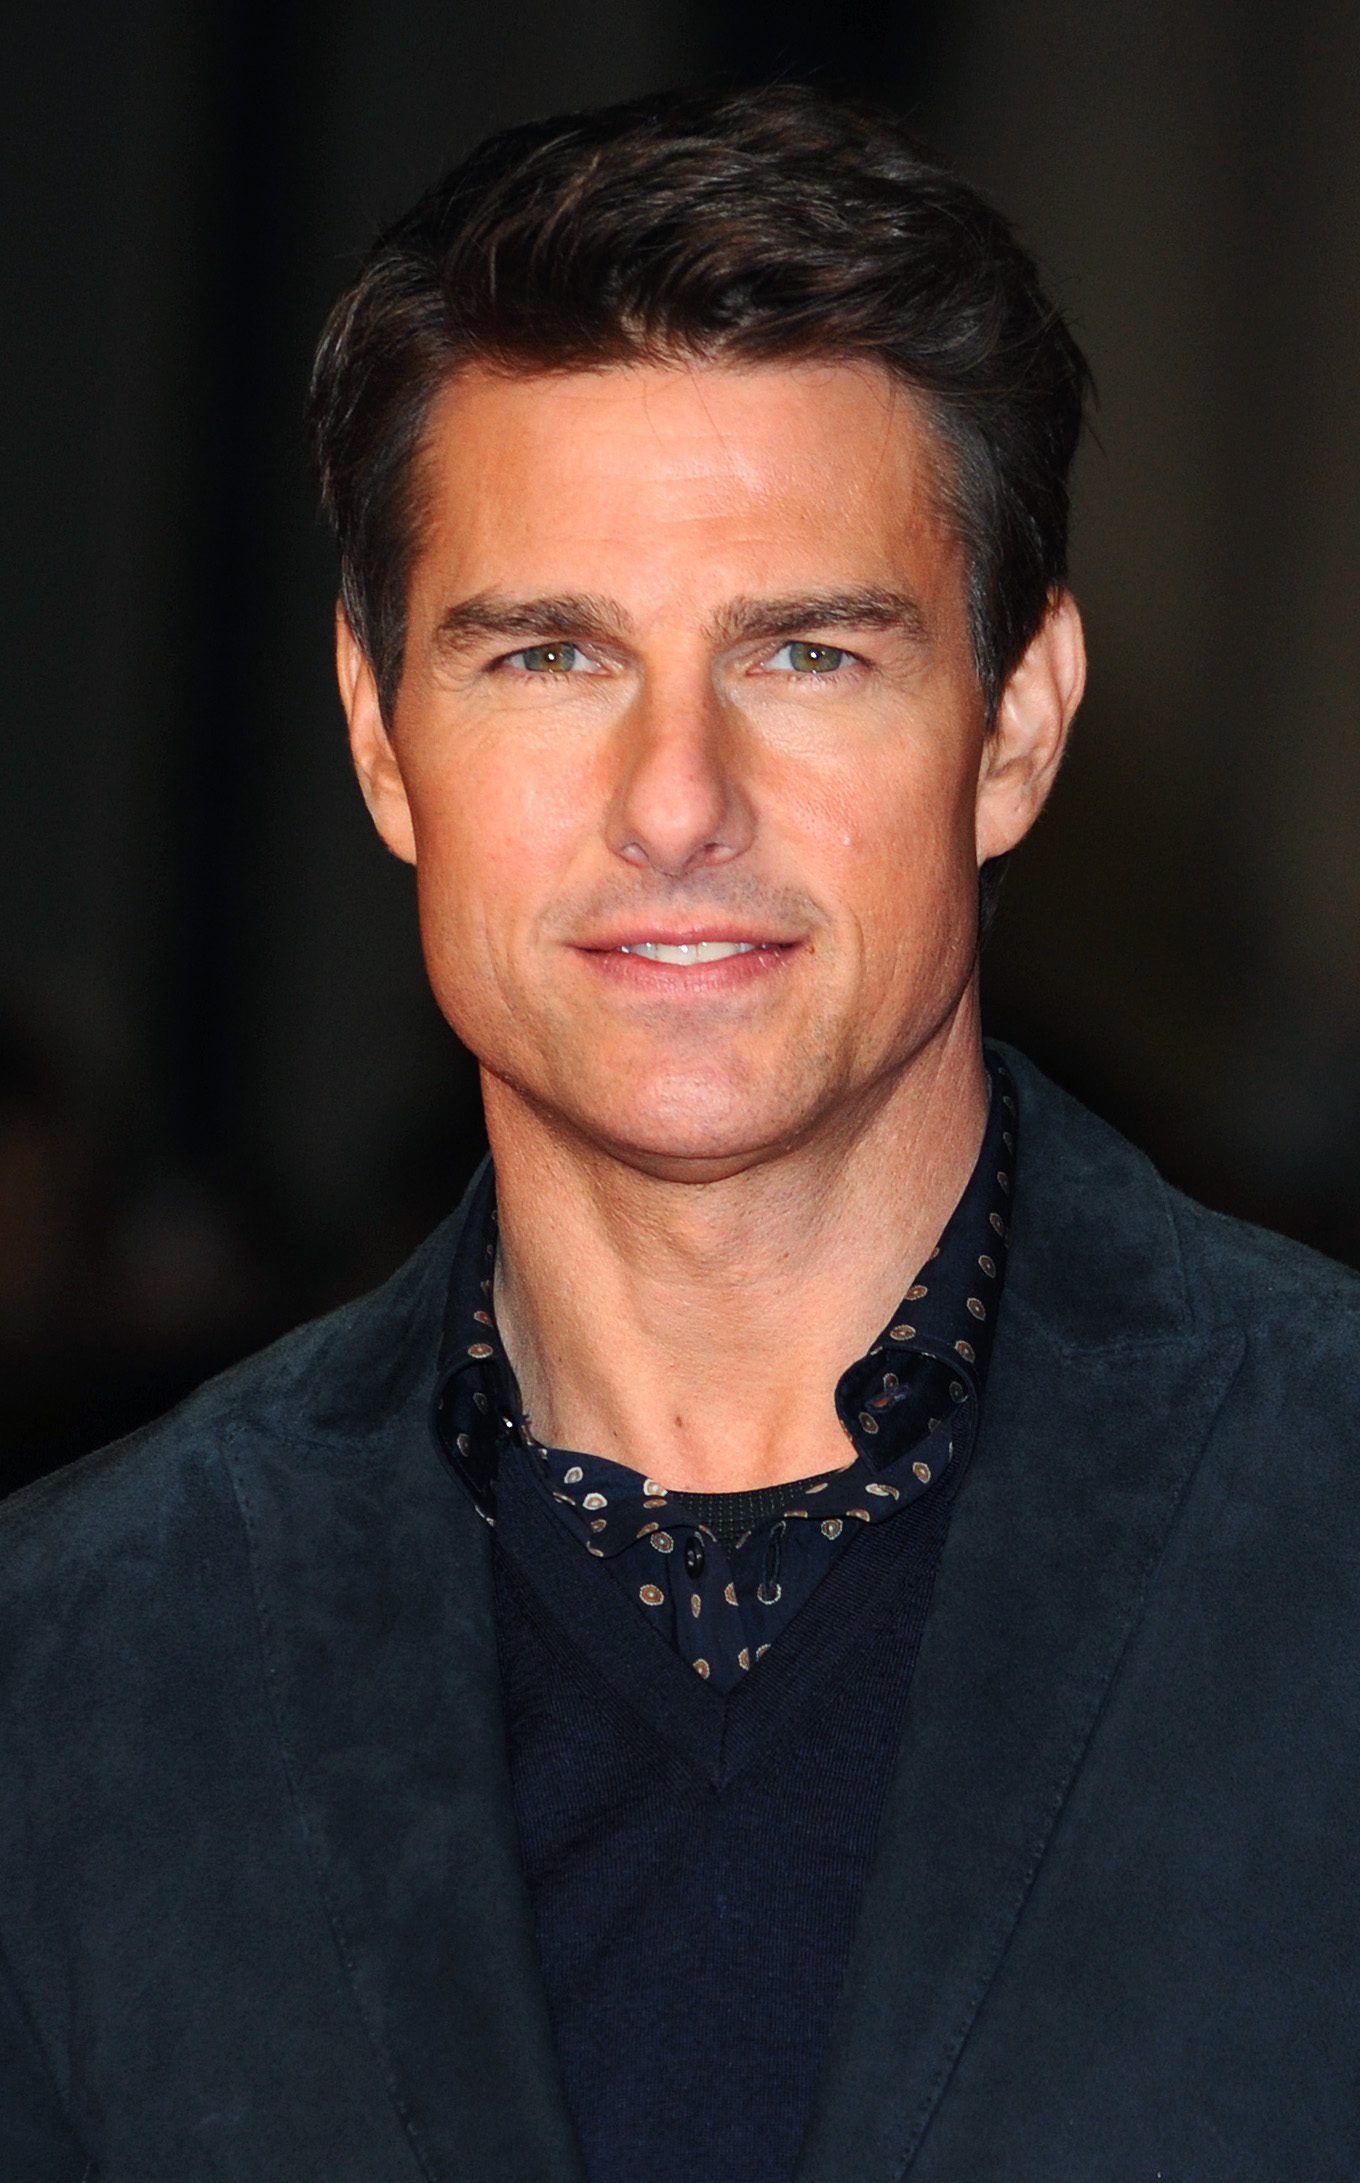 Tom Cruise besucht die "Jack Reacher"-Premiere am 10. Dezember 2012 in London, England | Quelle: Getty Images